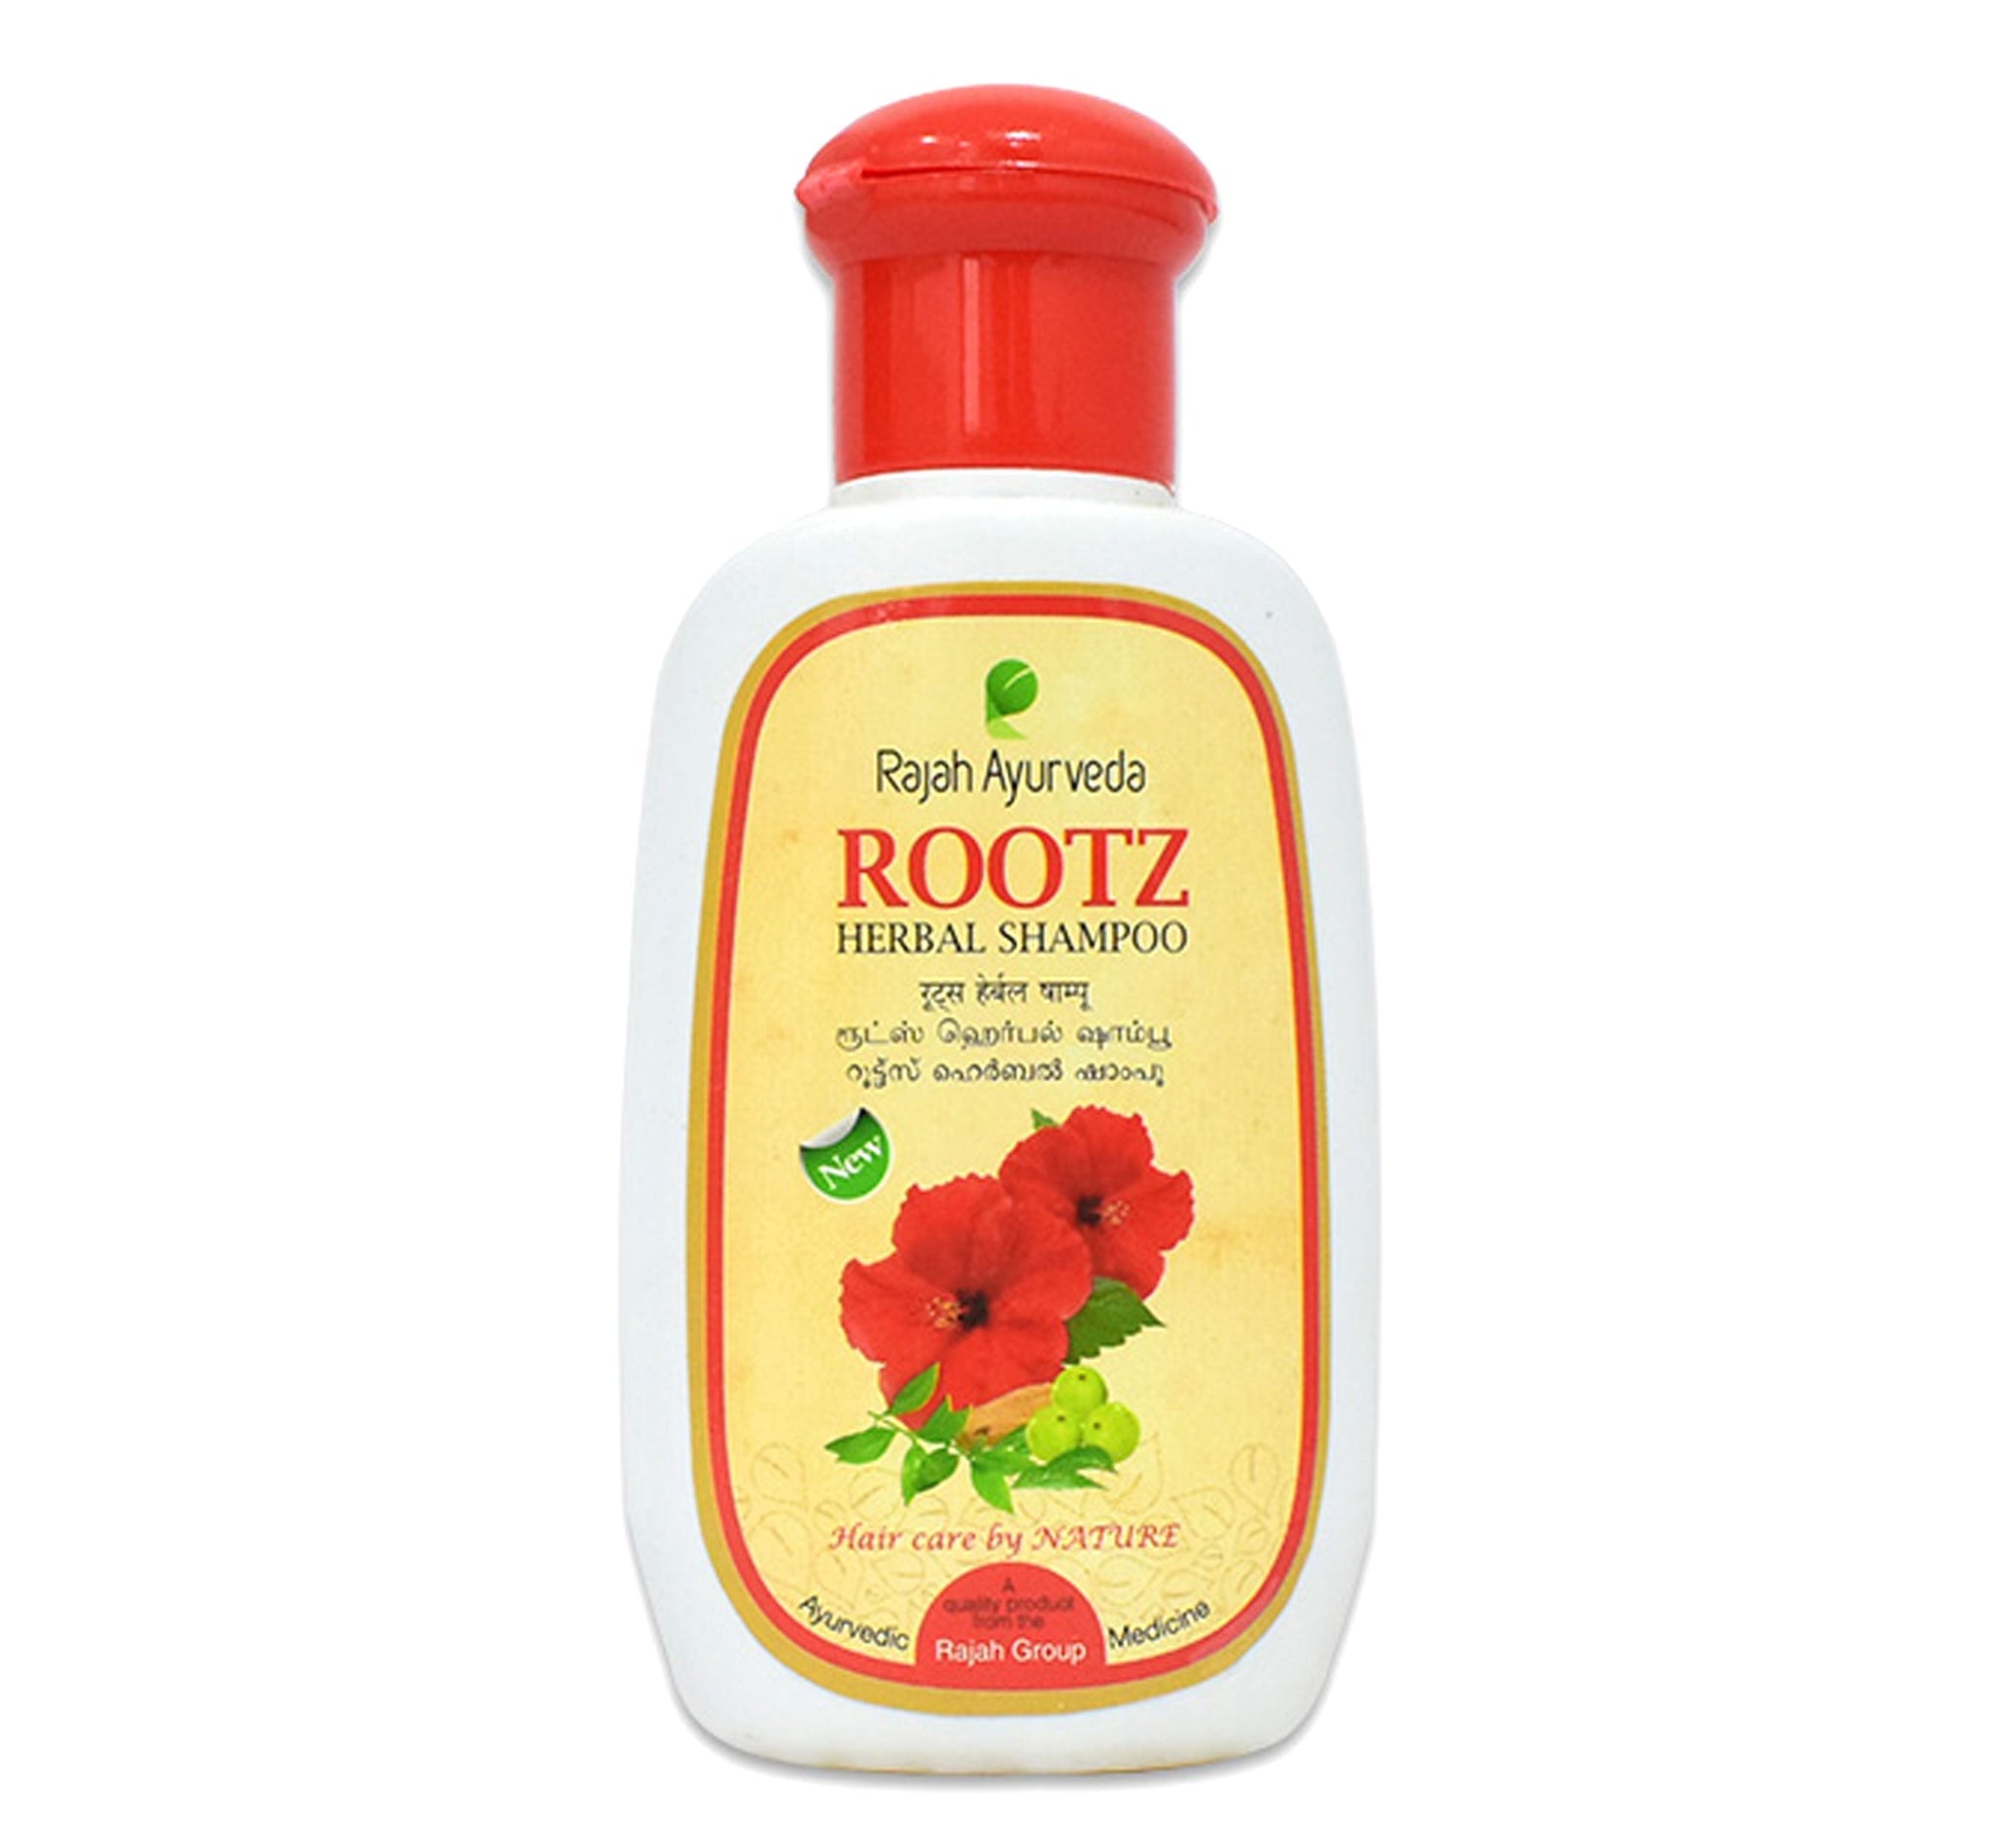 Rajah Ayurvedic Rootz Herbal Shampoo  100ml